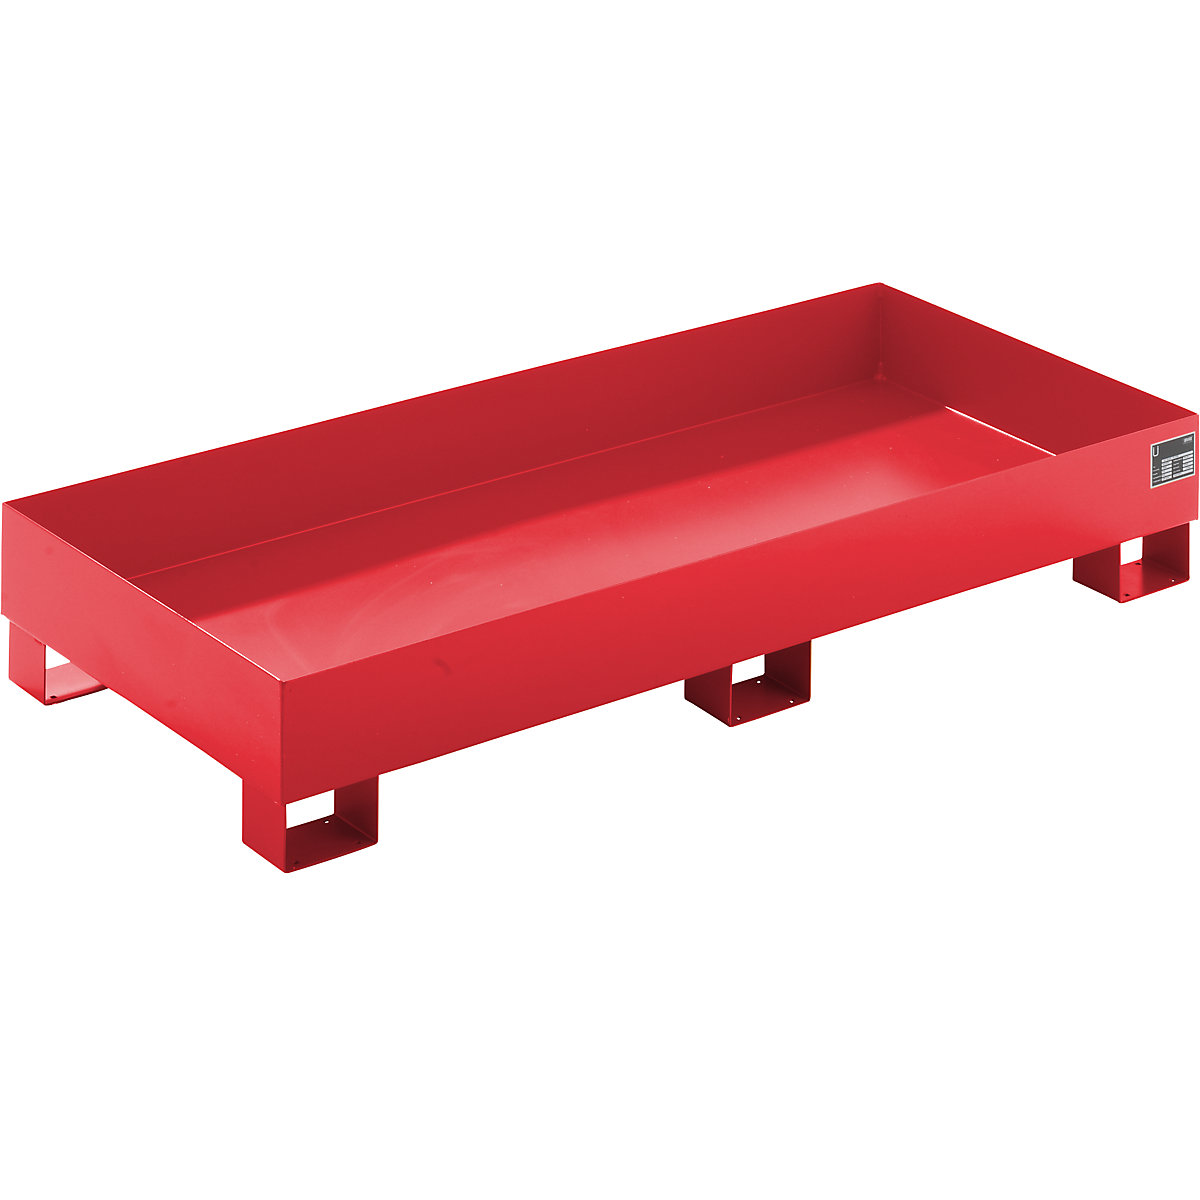 EUROKRAFTbasic – Sump tray made from sheet steel